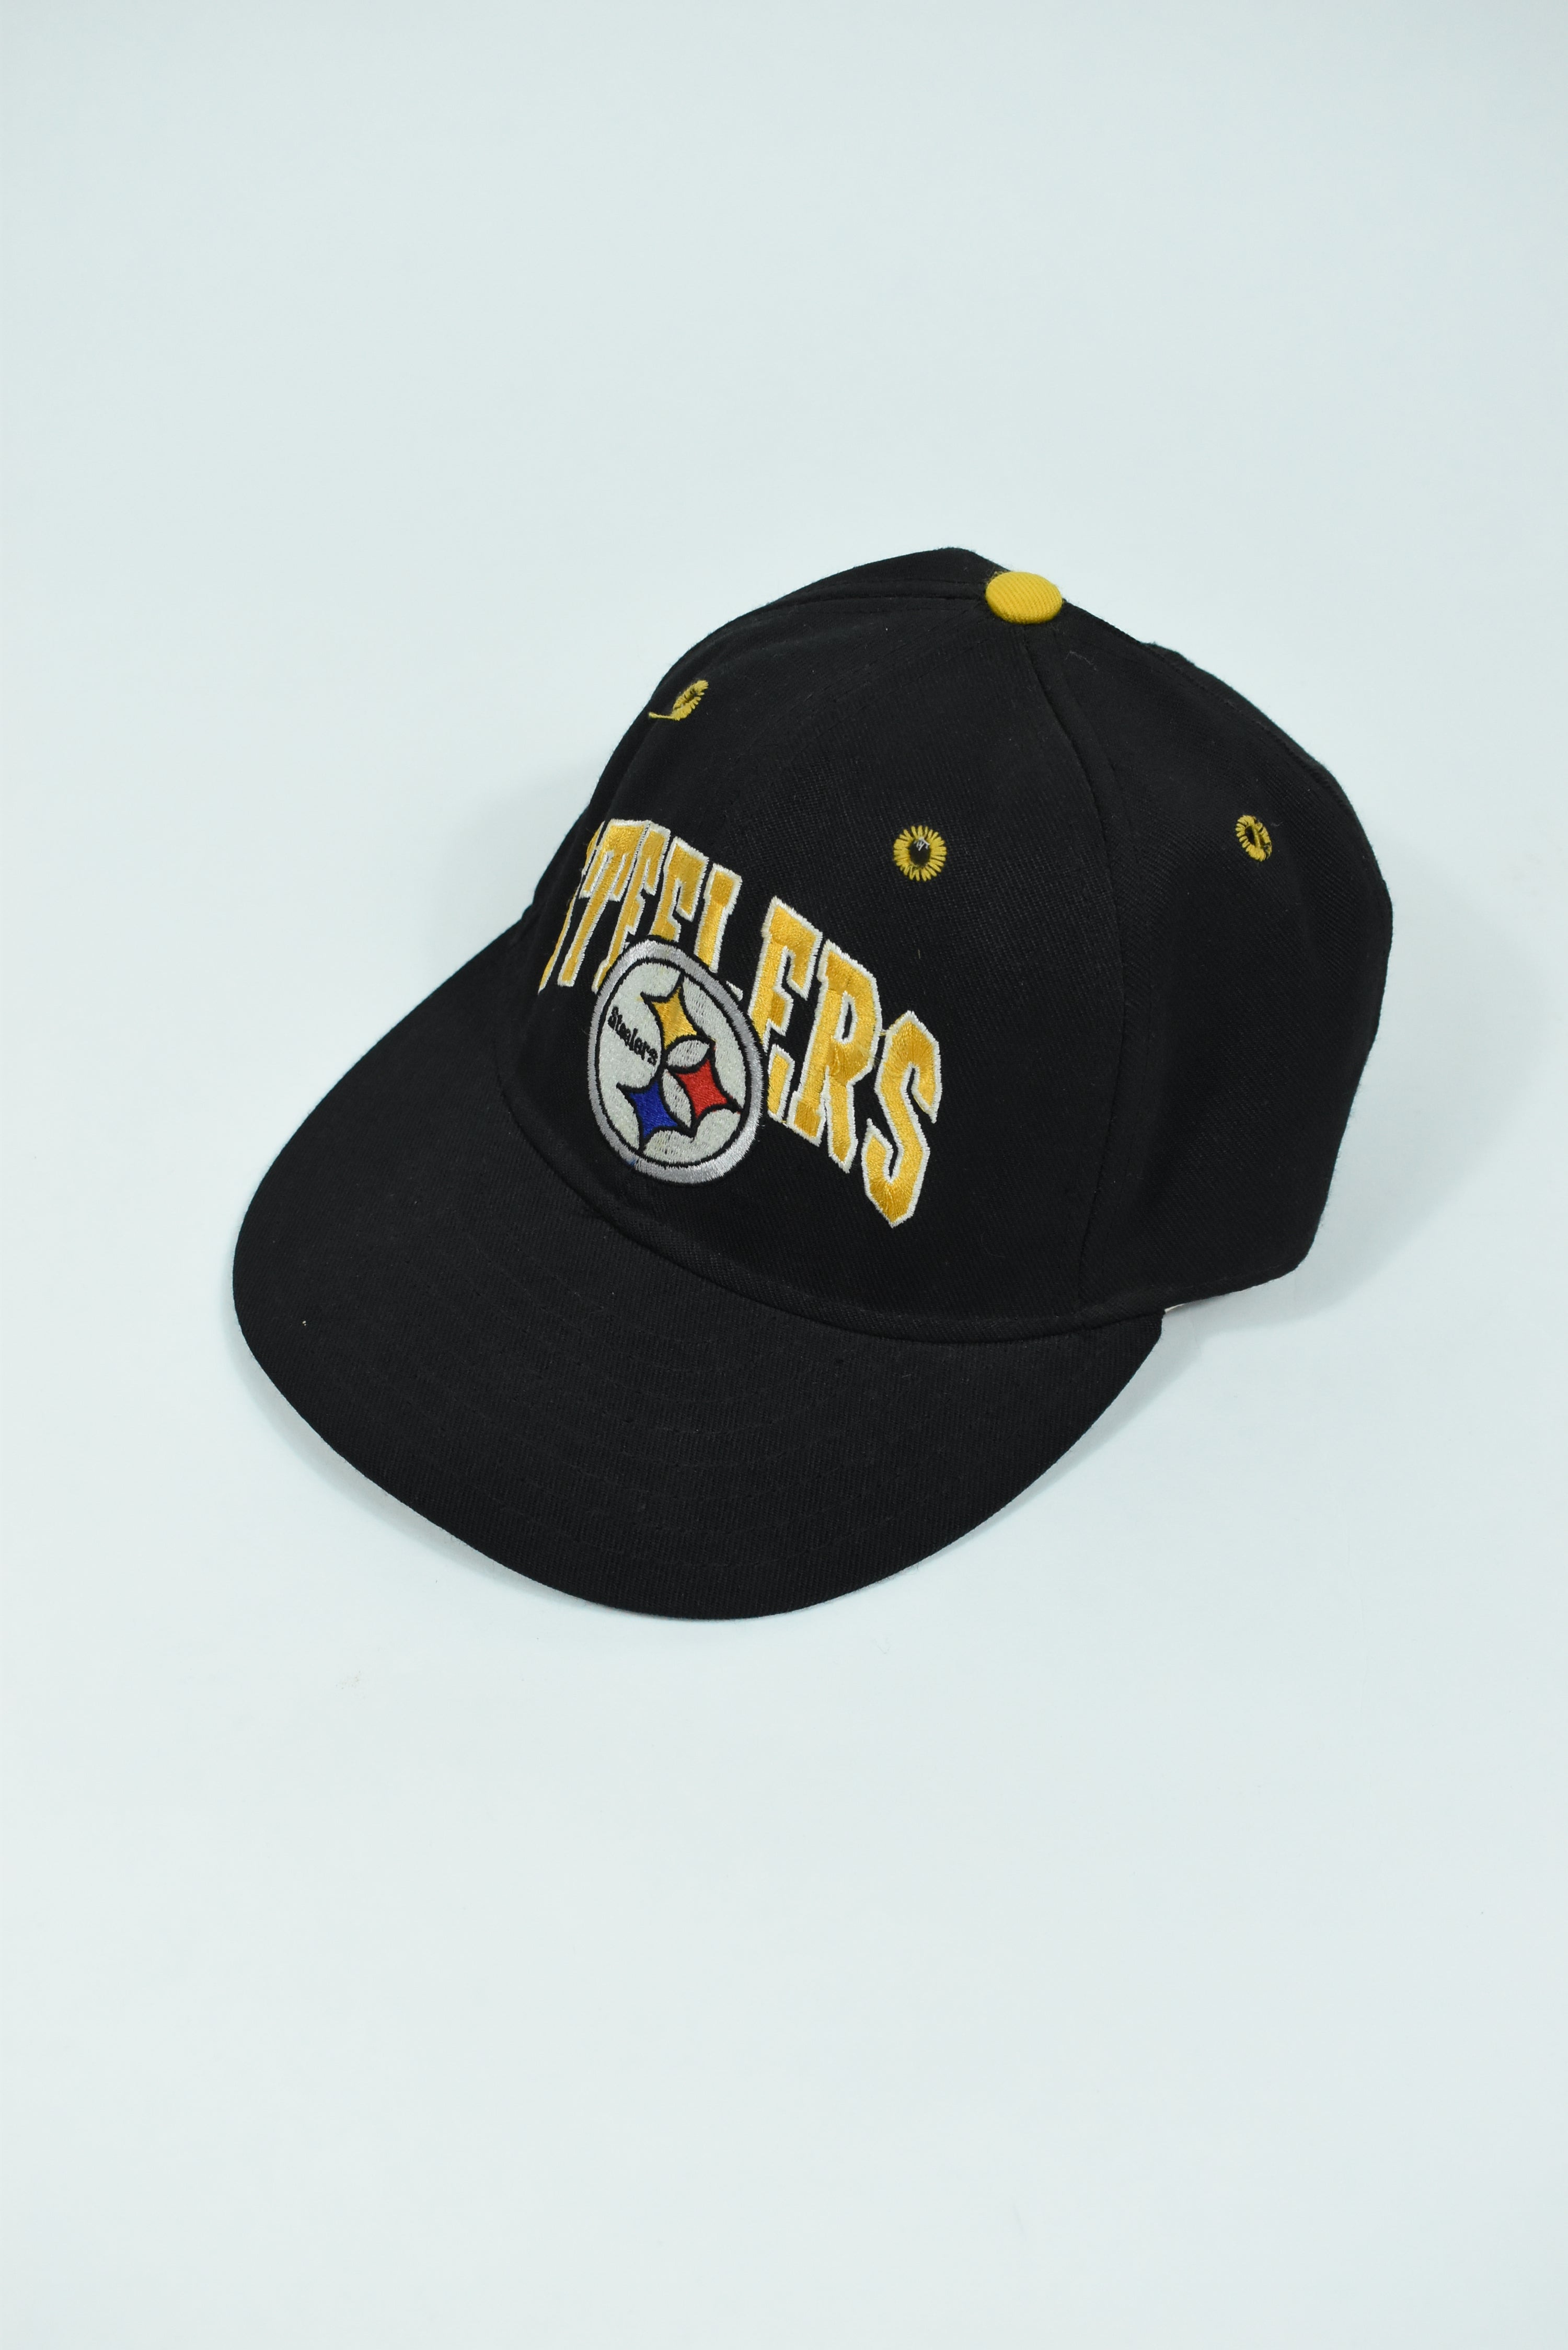 Vintage Steelers Embroidery Hat